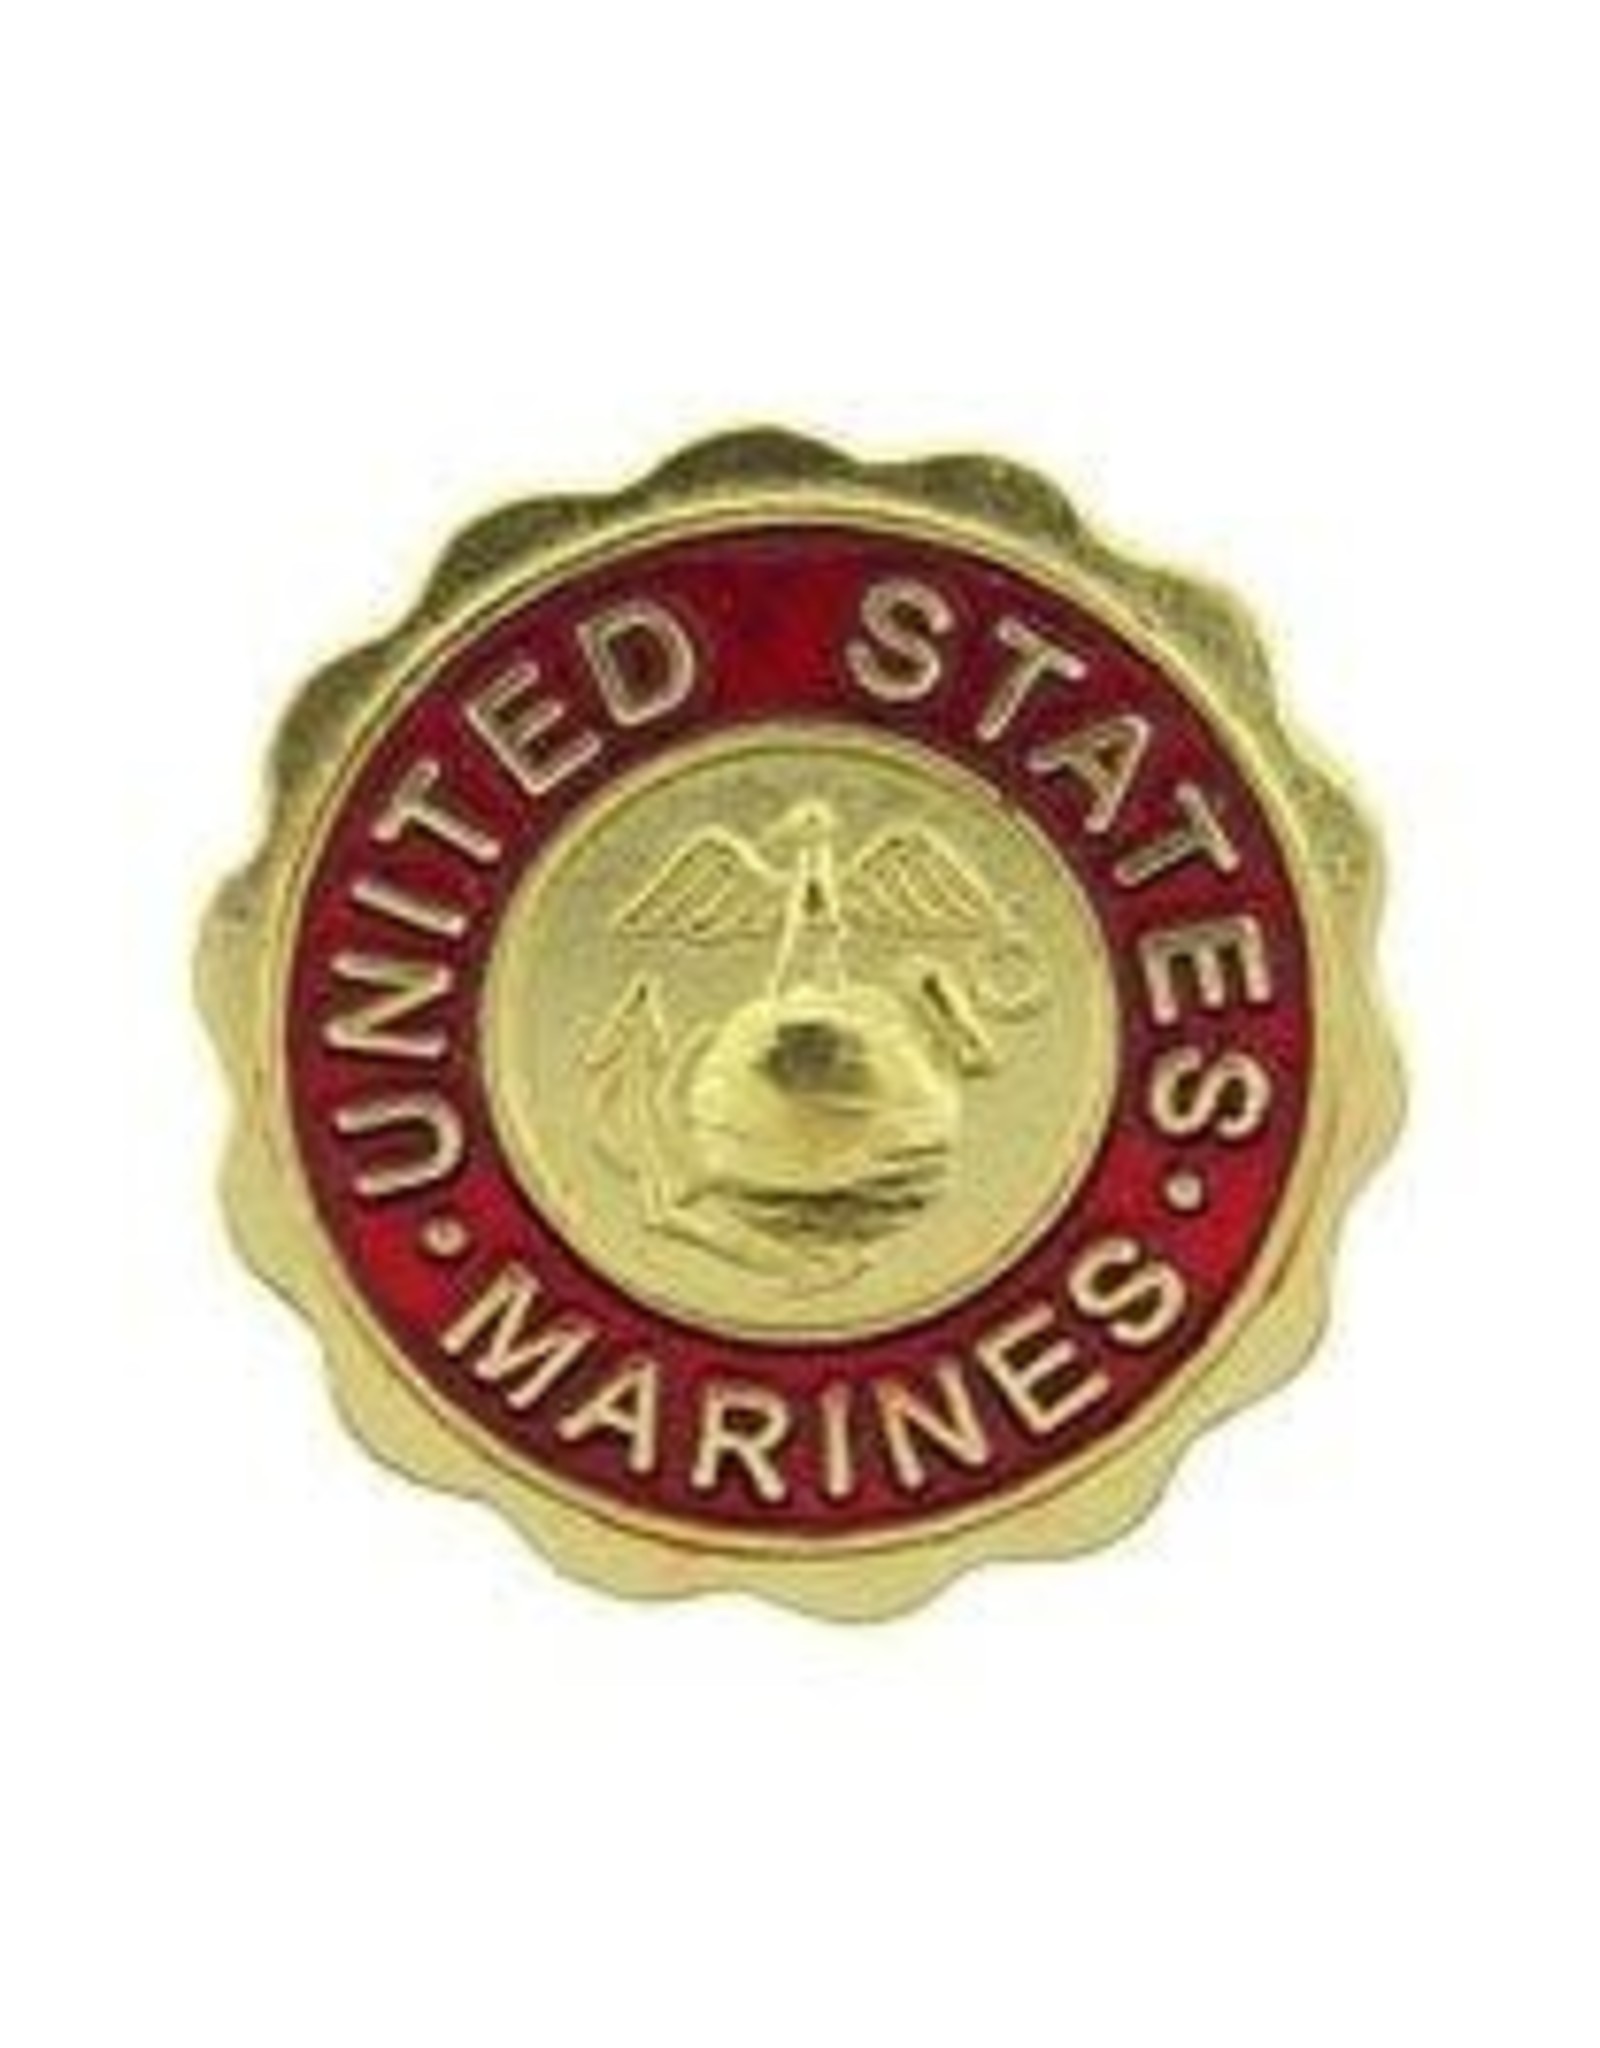 Pin - USMC Logo Marines